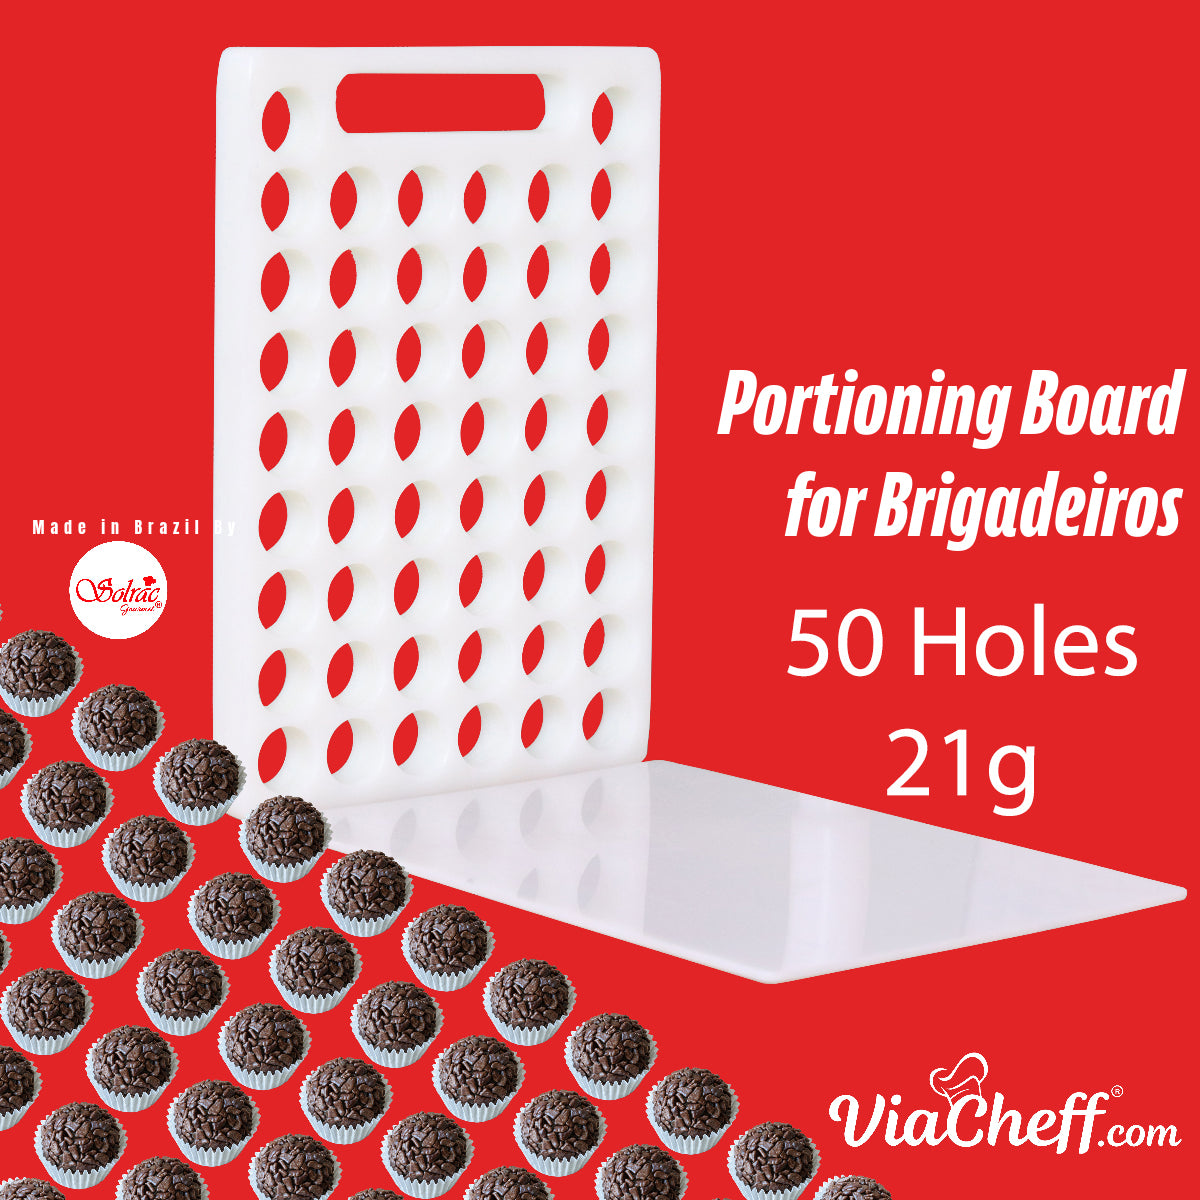 Portioning Board for 21g Brigadeiros (50 Holes)